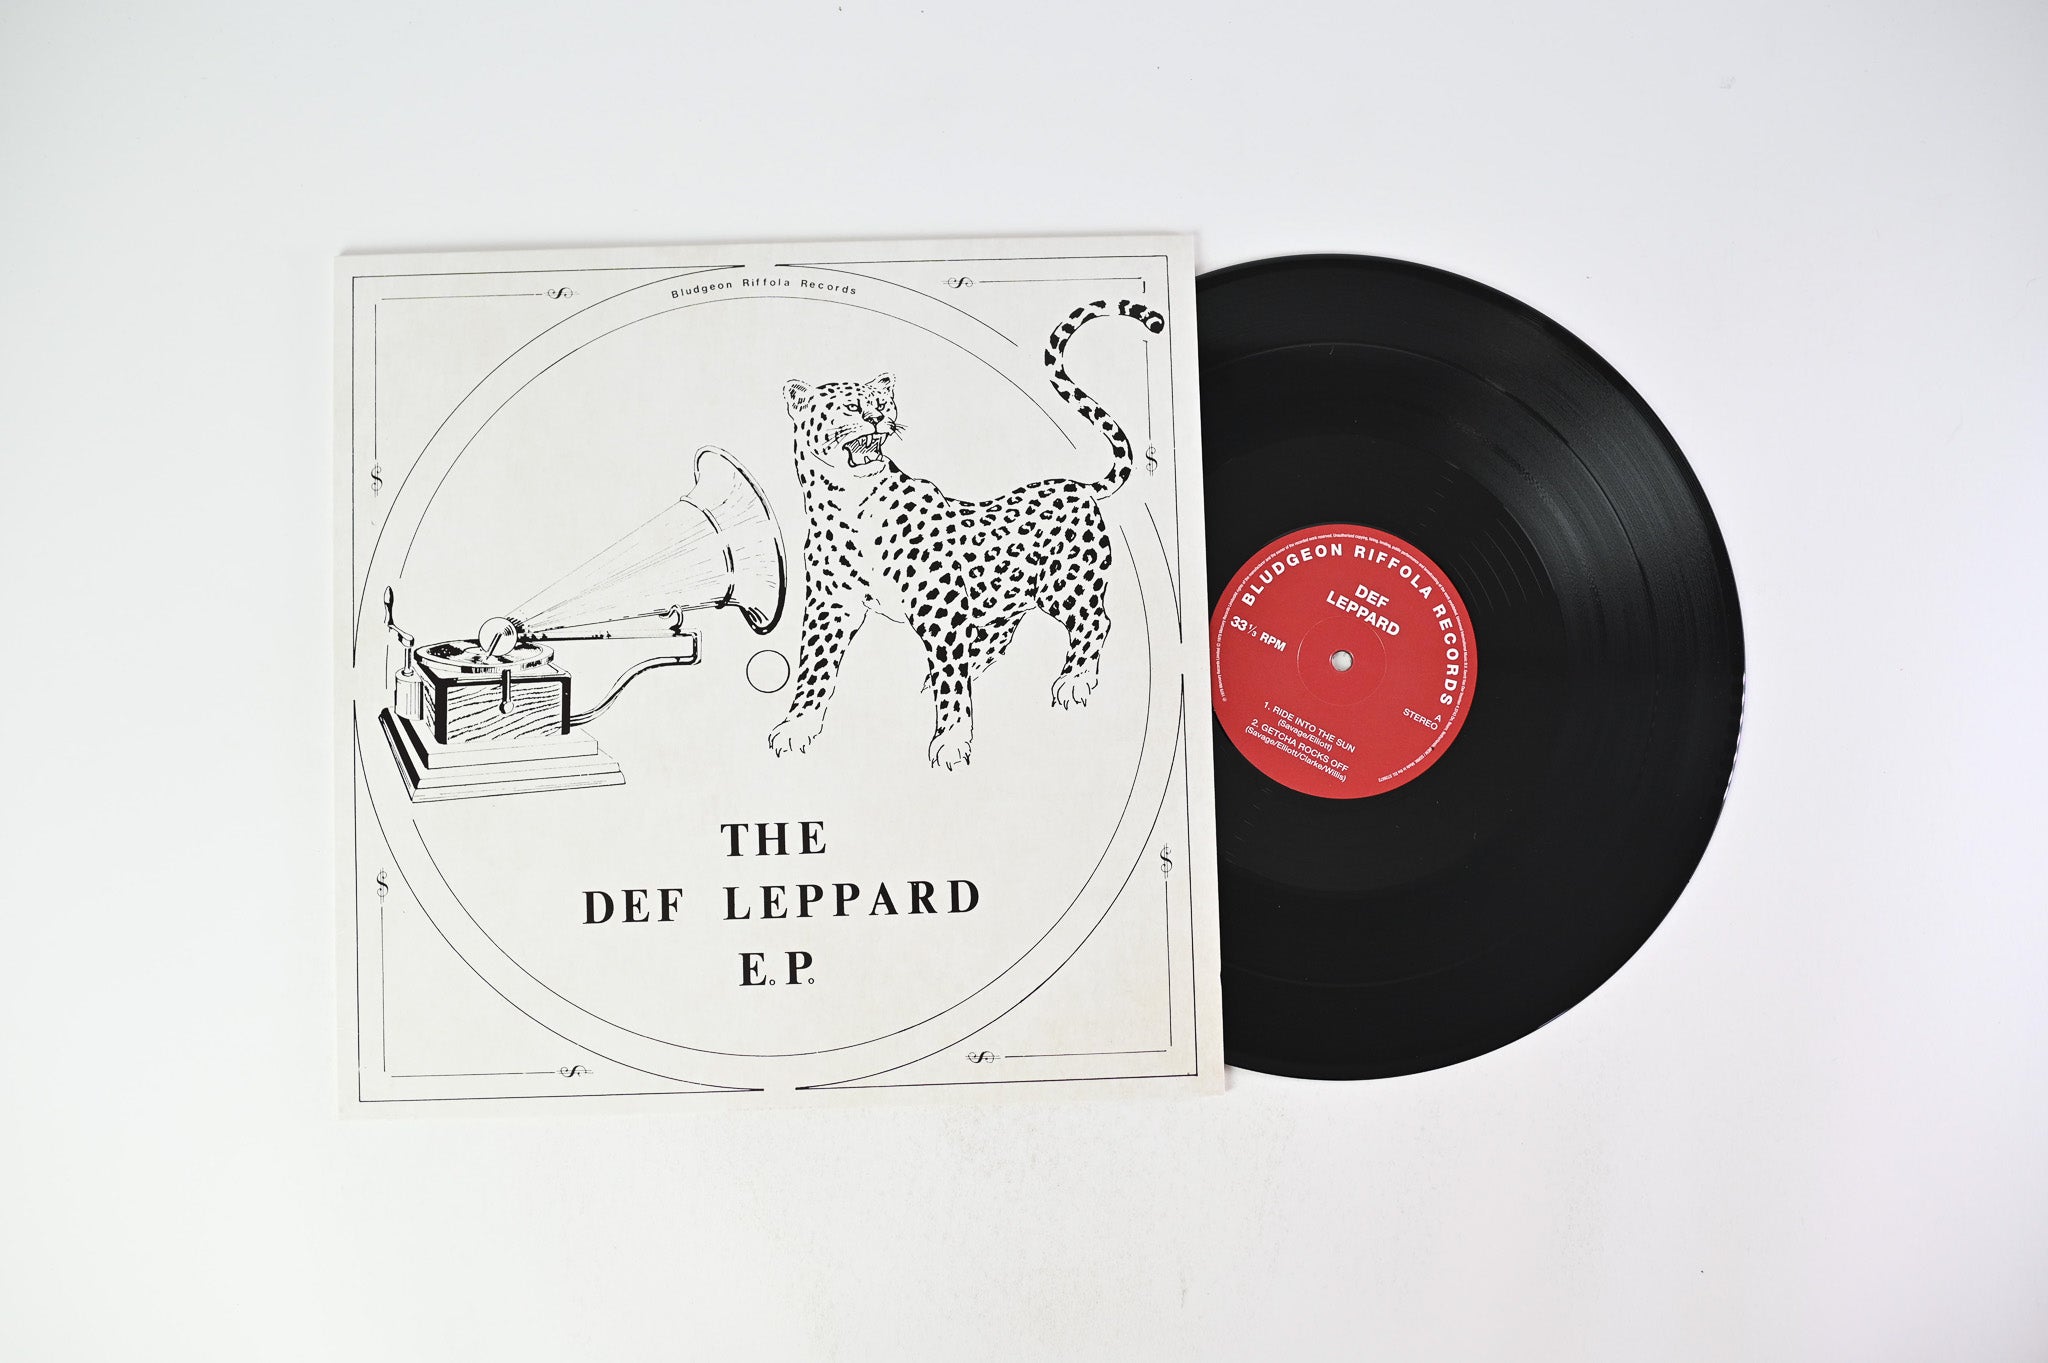 Def Leppard - The Def Leppard E.P. on Bludgeon Riffola Ltd RSD 2017 Reissue